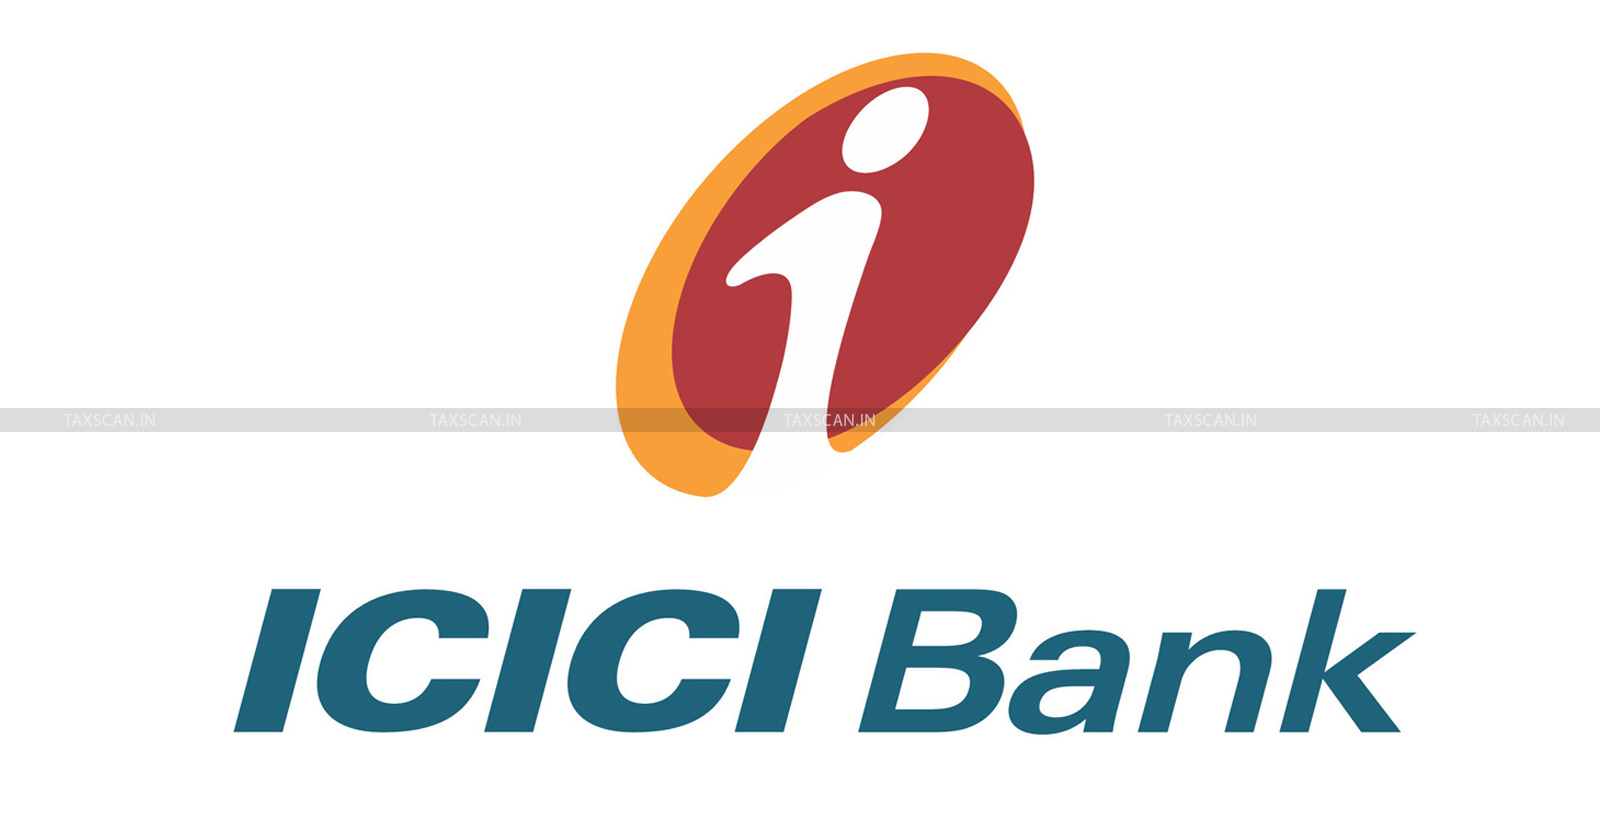 ITAT deletes Addition made towards Gift of cash amount deposited -ICICI Bank - taxscan